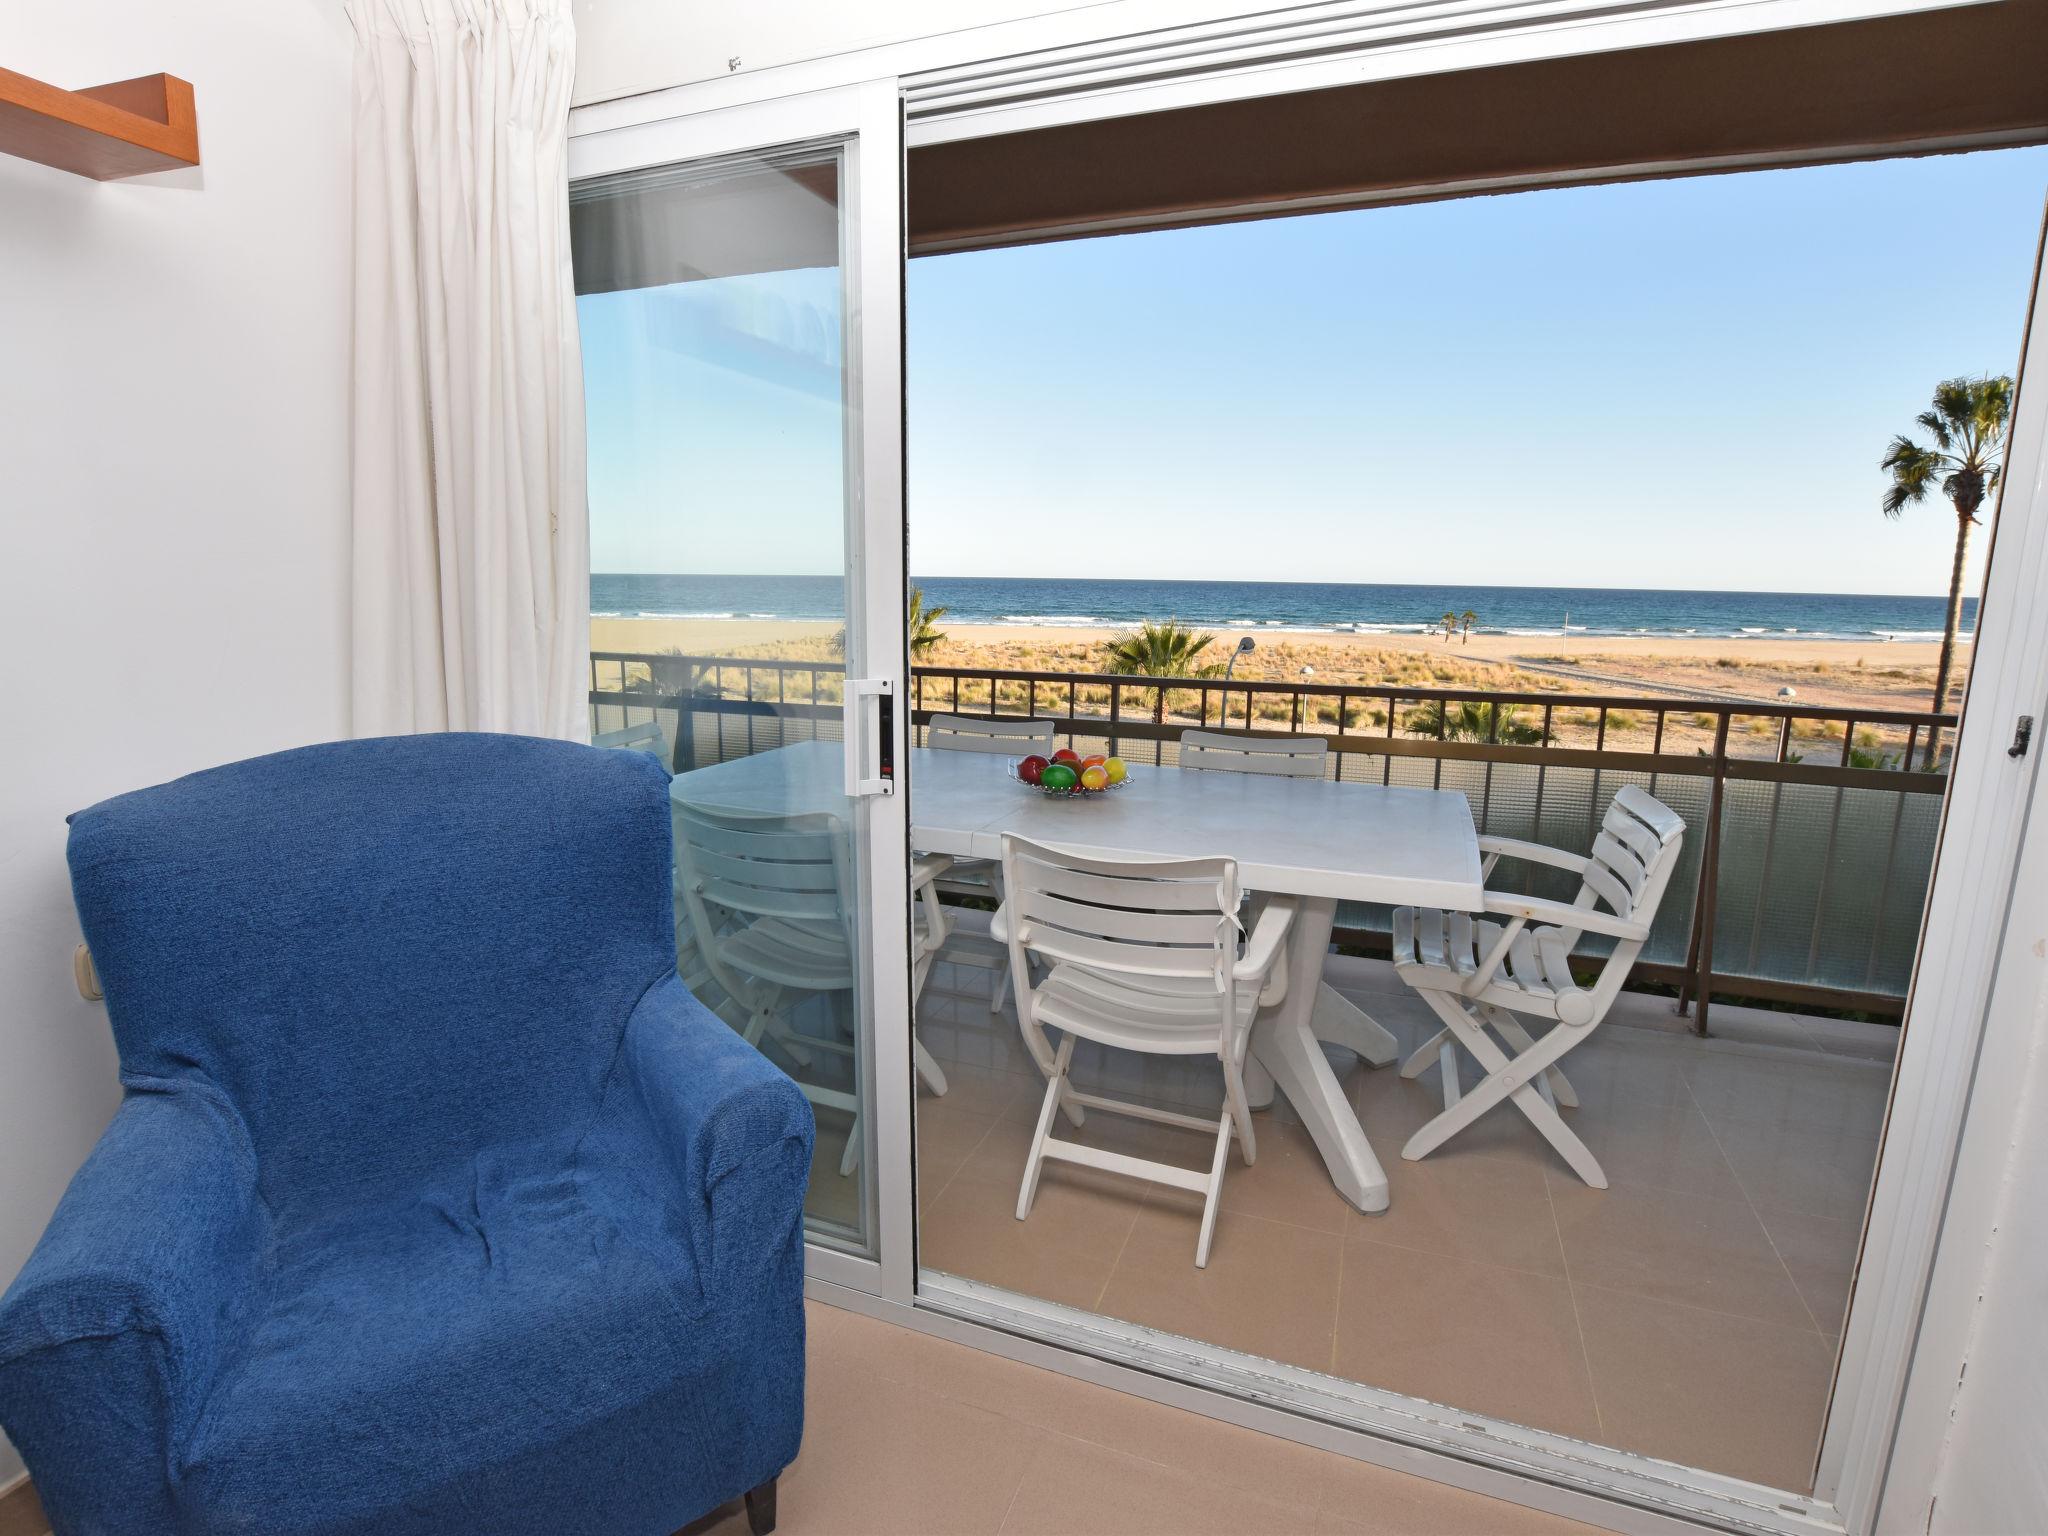 Photo 2 - Appartement de 4 chambres à Torredembarra avec terrasse et vues à la mer